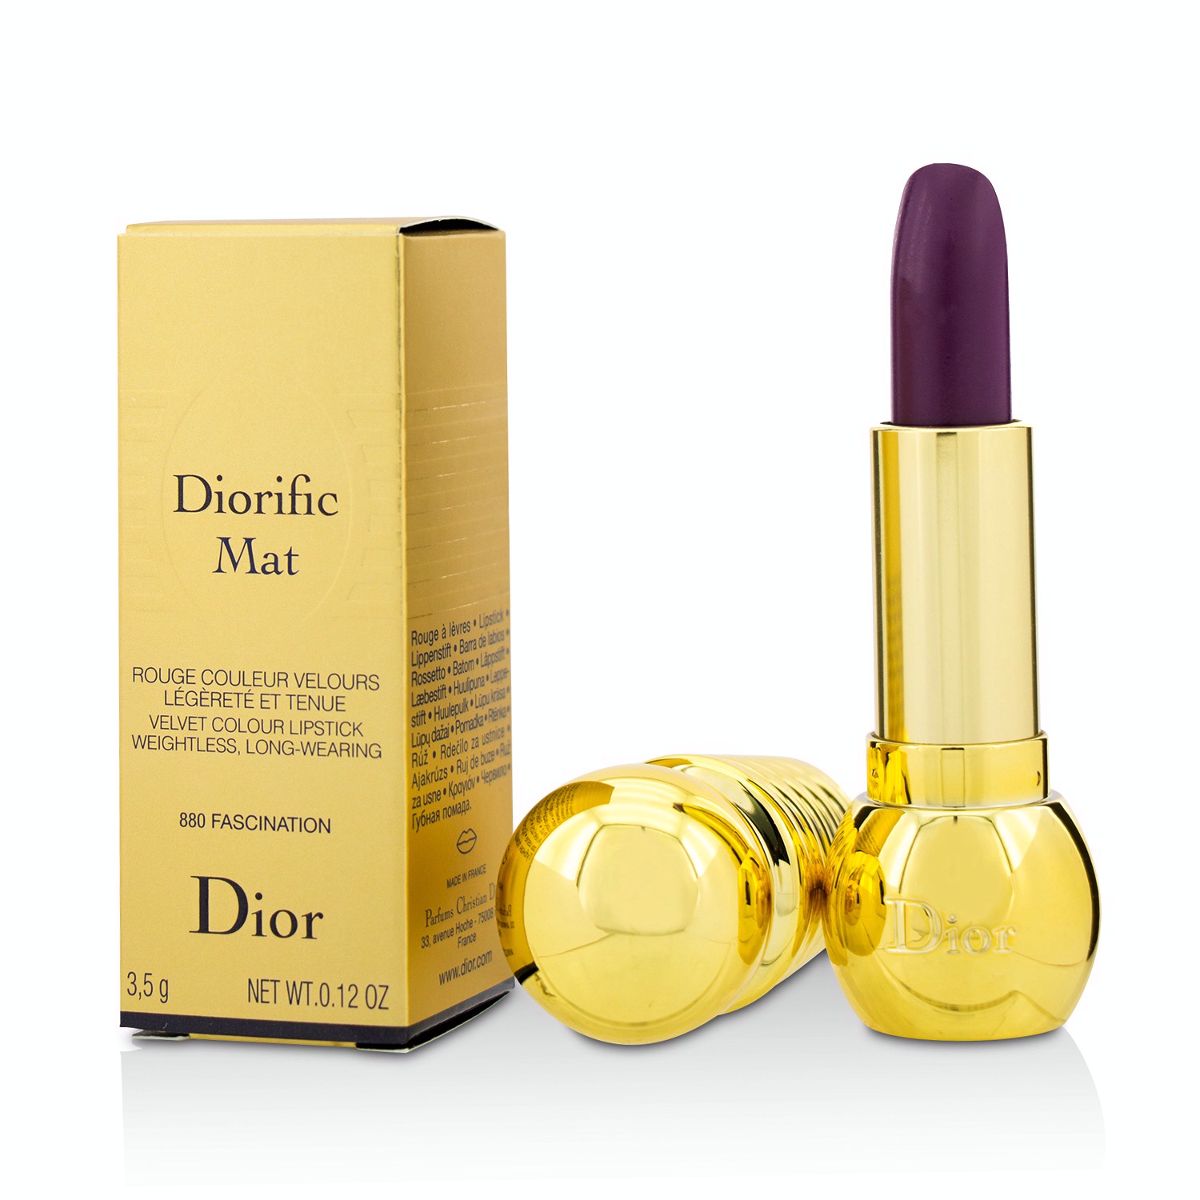 Diorific Mat Velvet Colour Lipstick - # 880 Fascination Christian Dior Image